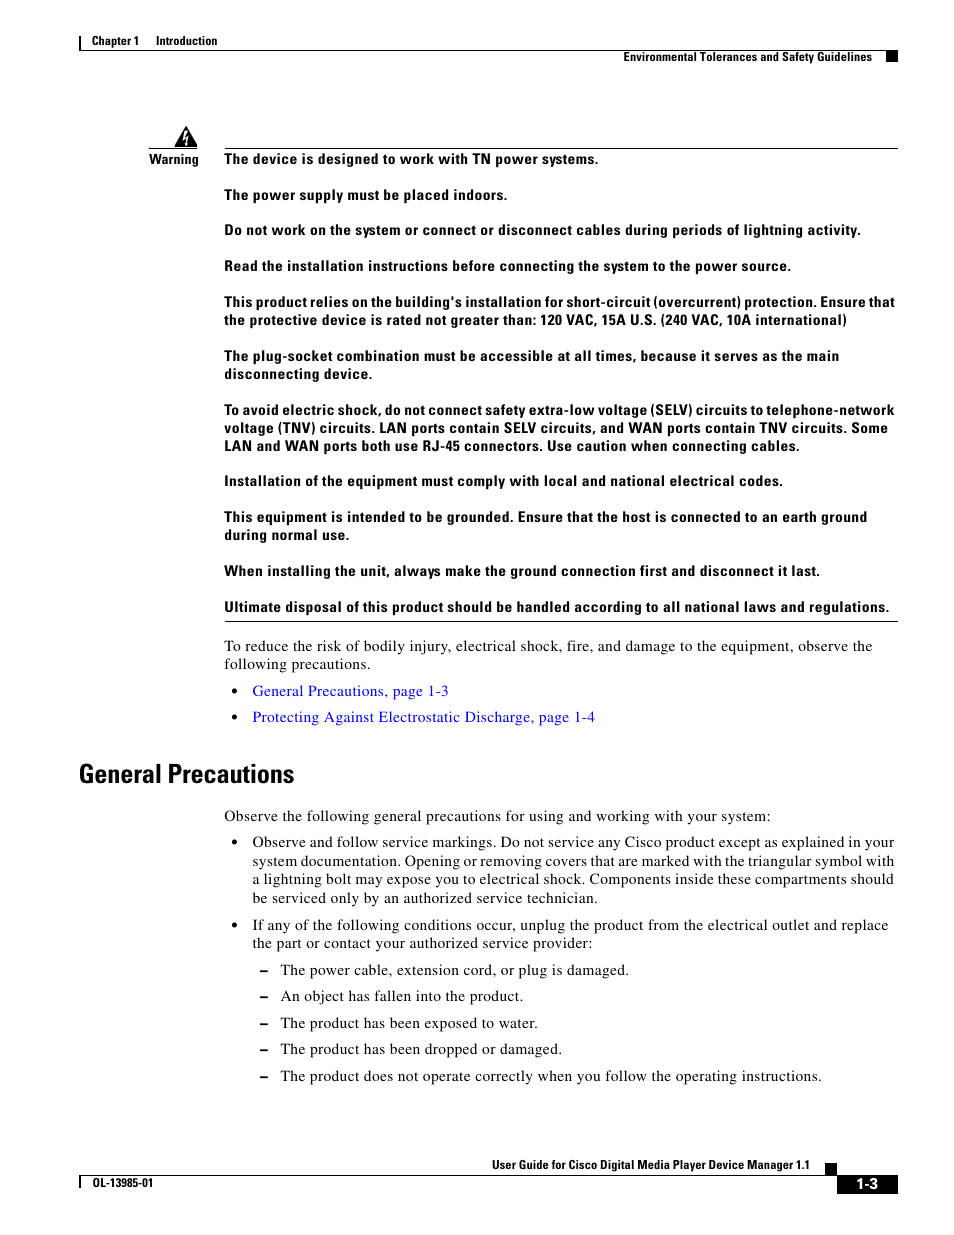 General precautions | Cisco OL-13985-01 User Manual | Page 3 / 10